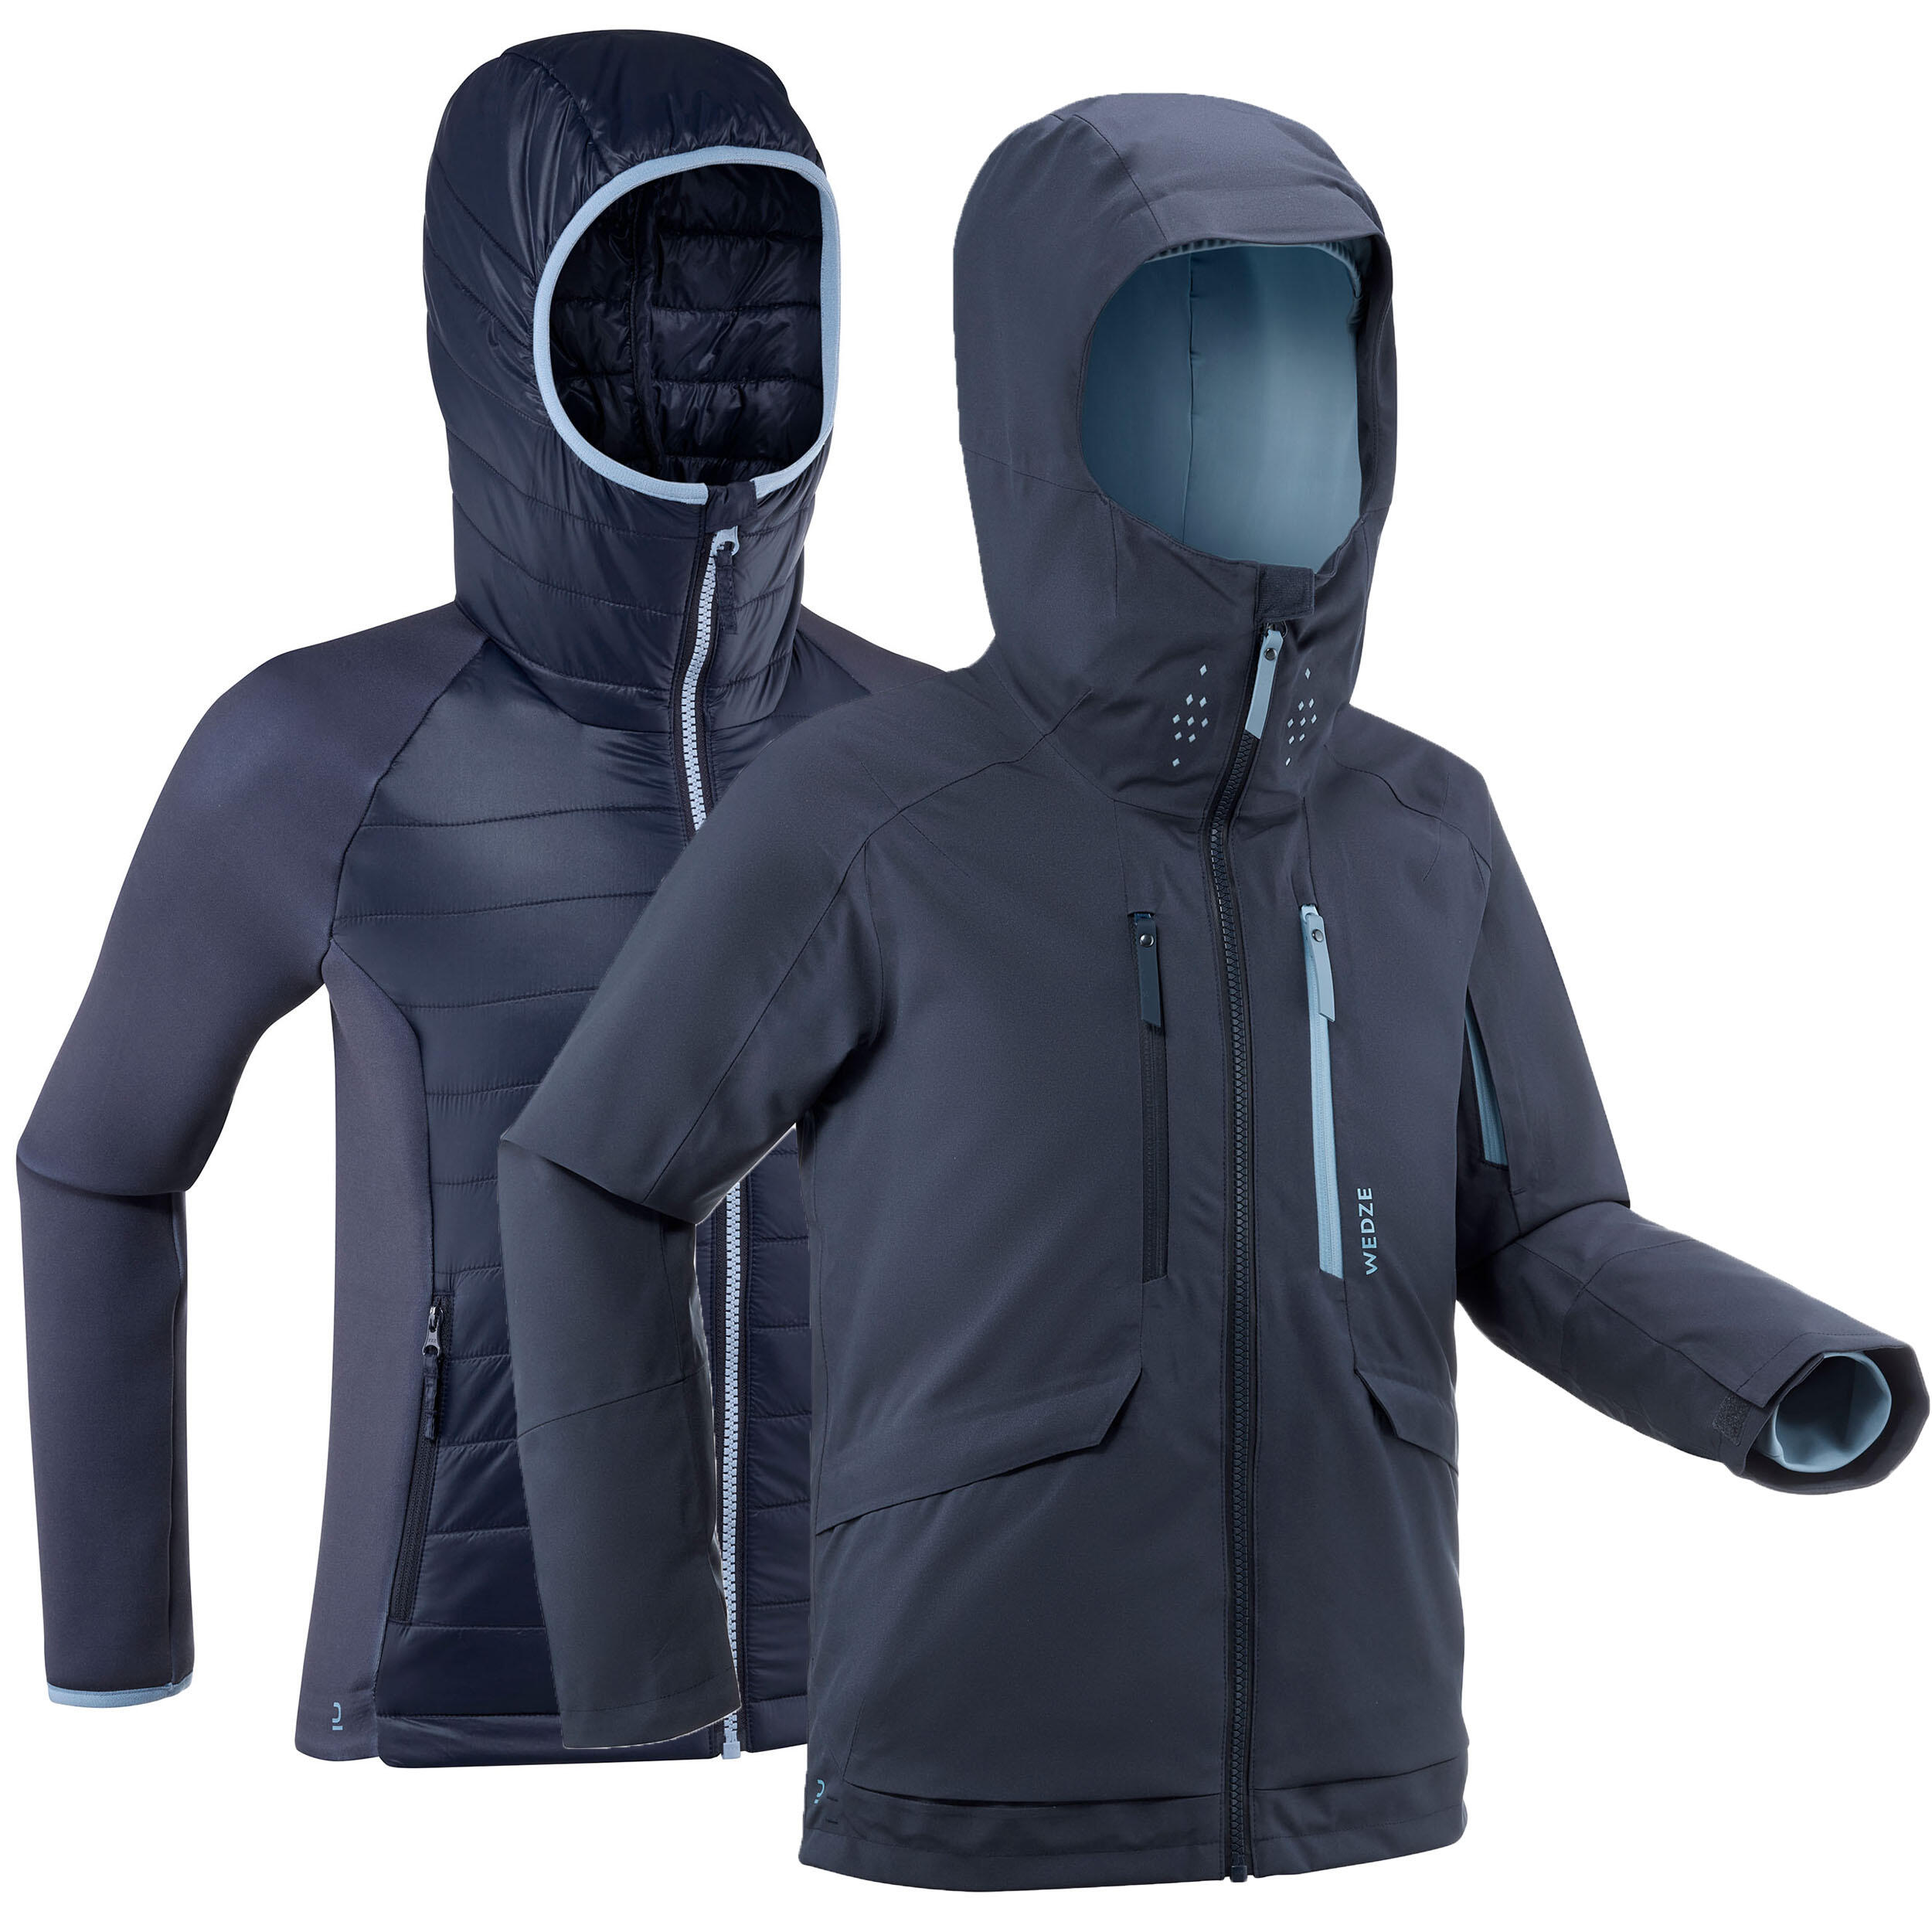 Waterproof Jackets and Coats